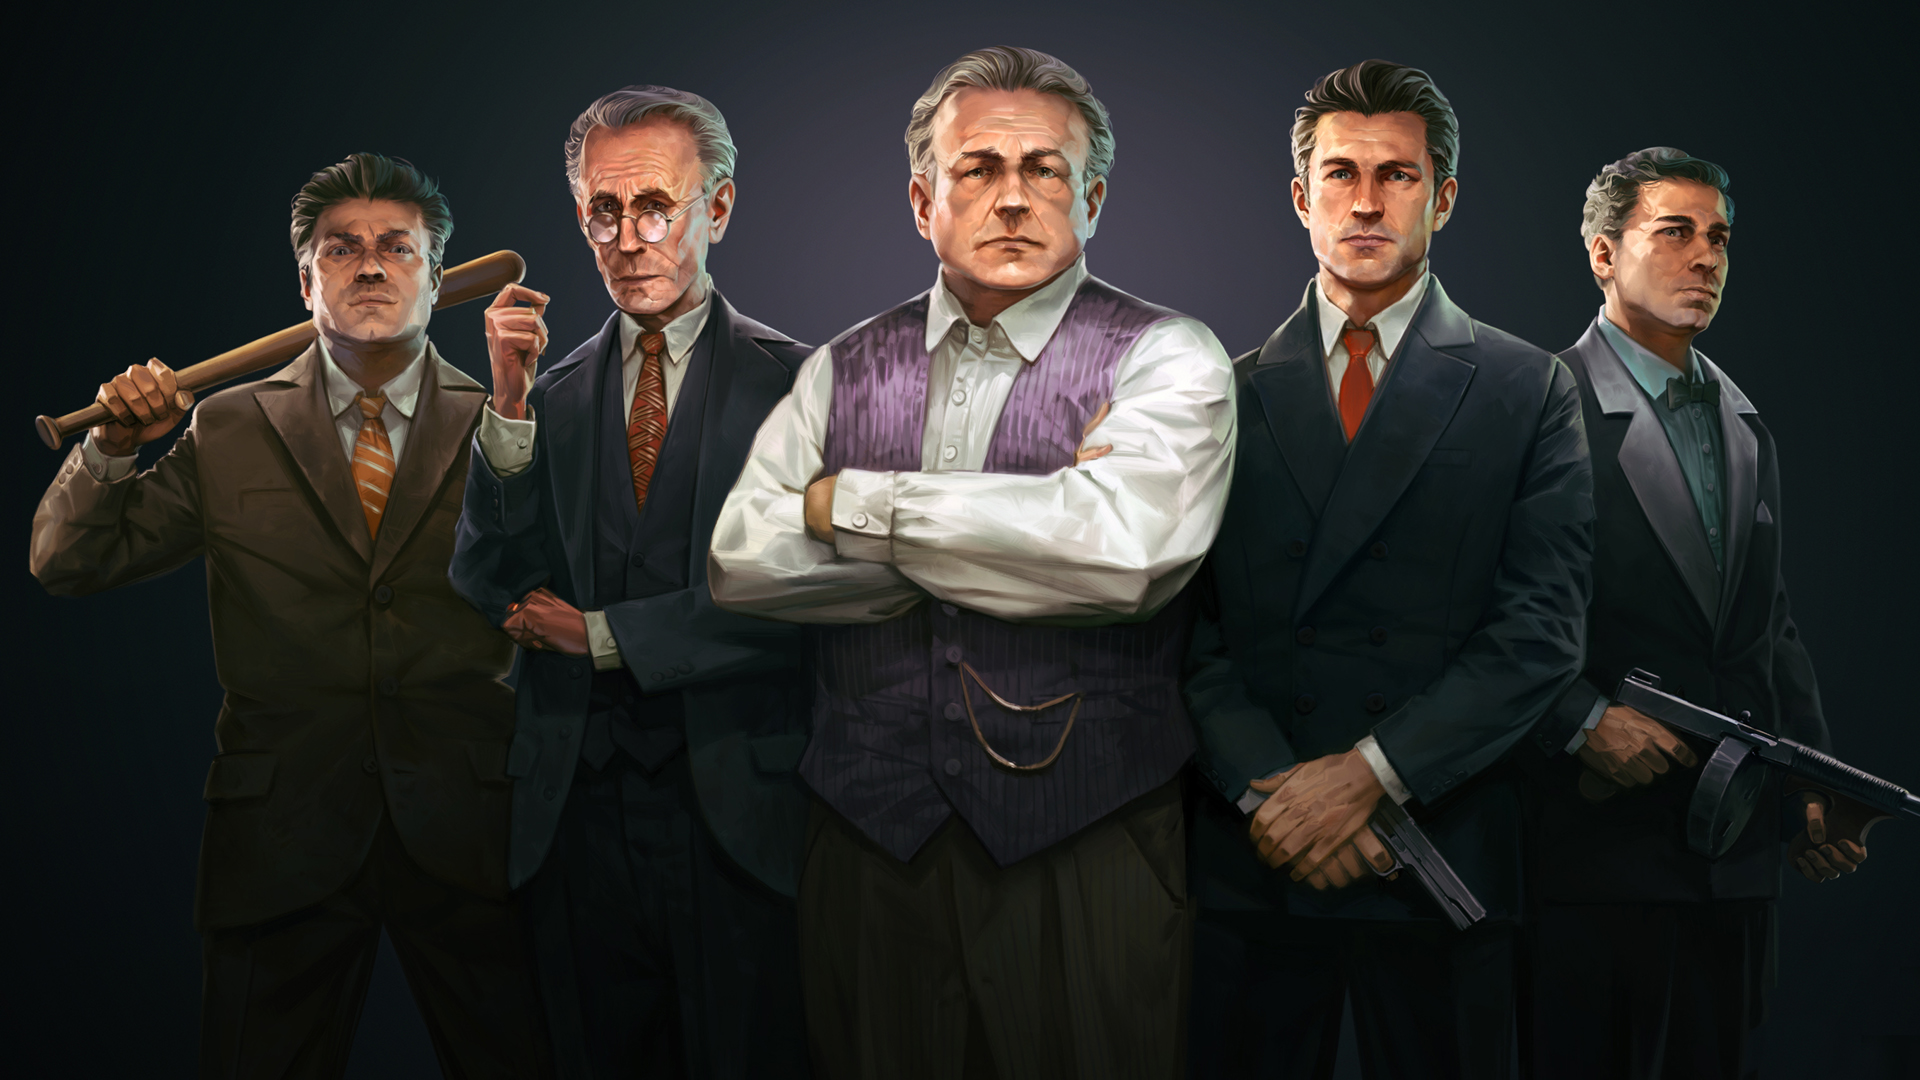 Mafia (video game) - Wikipedia